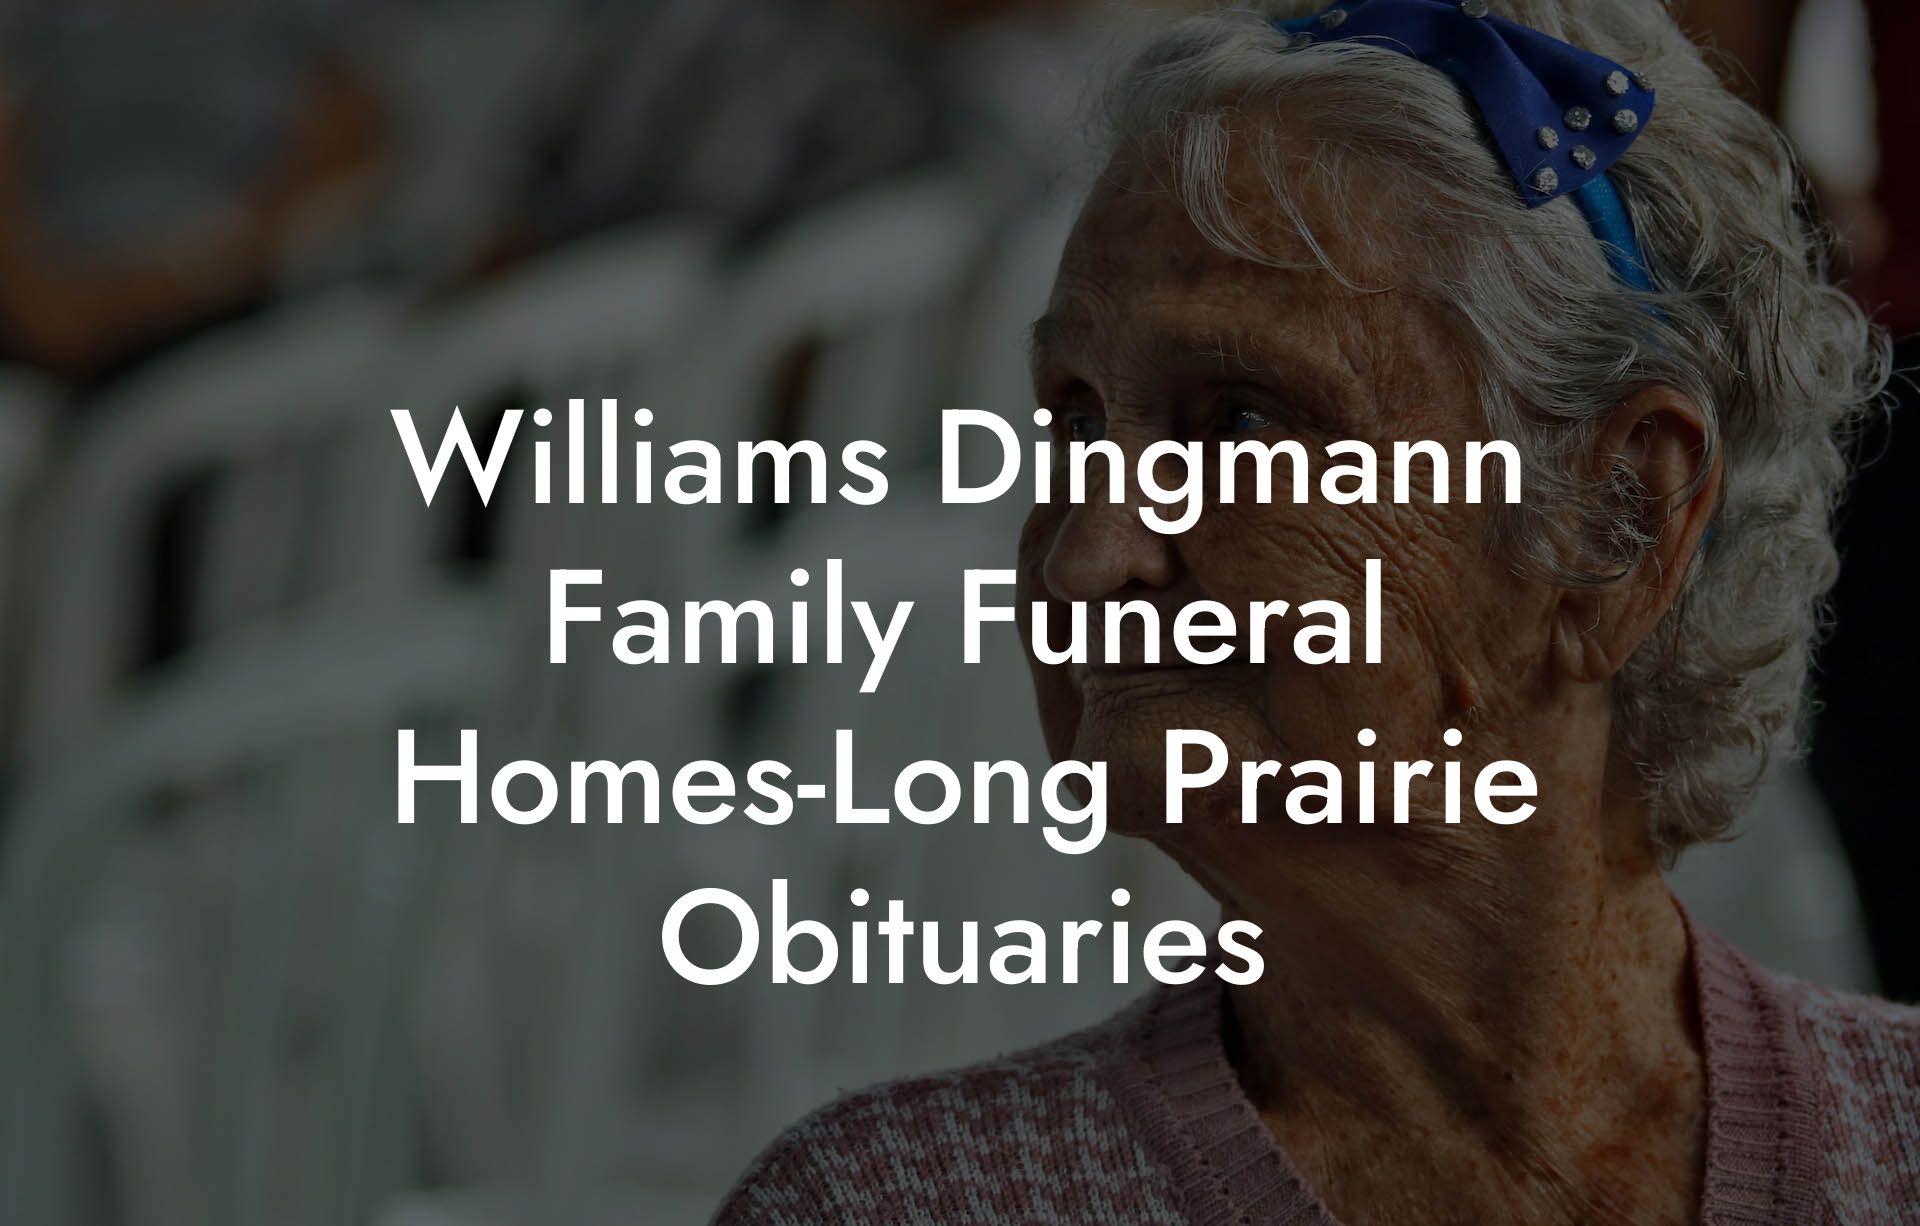 Williams Dingmann Family Funeral Homes-Long Prairie Obituaries